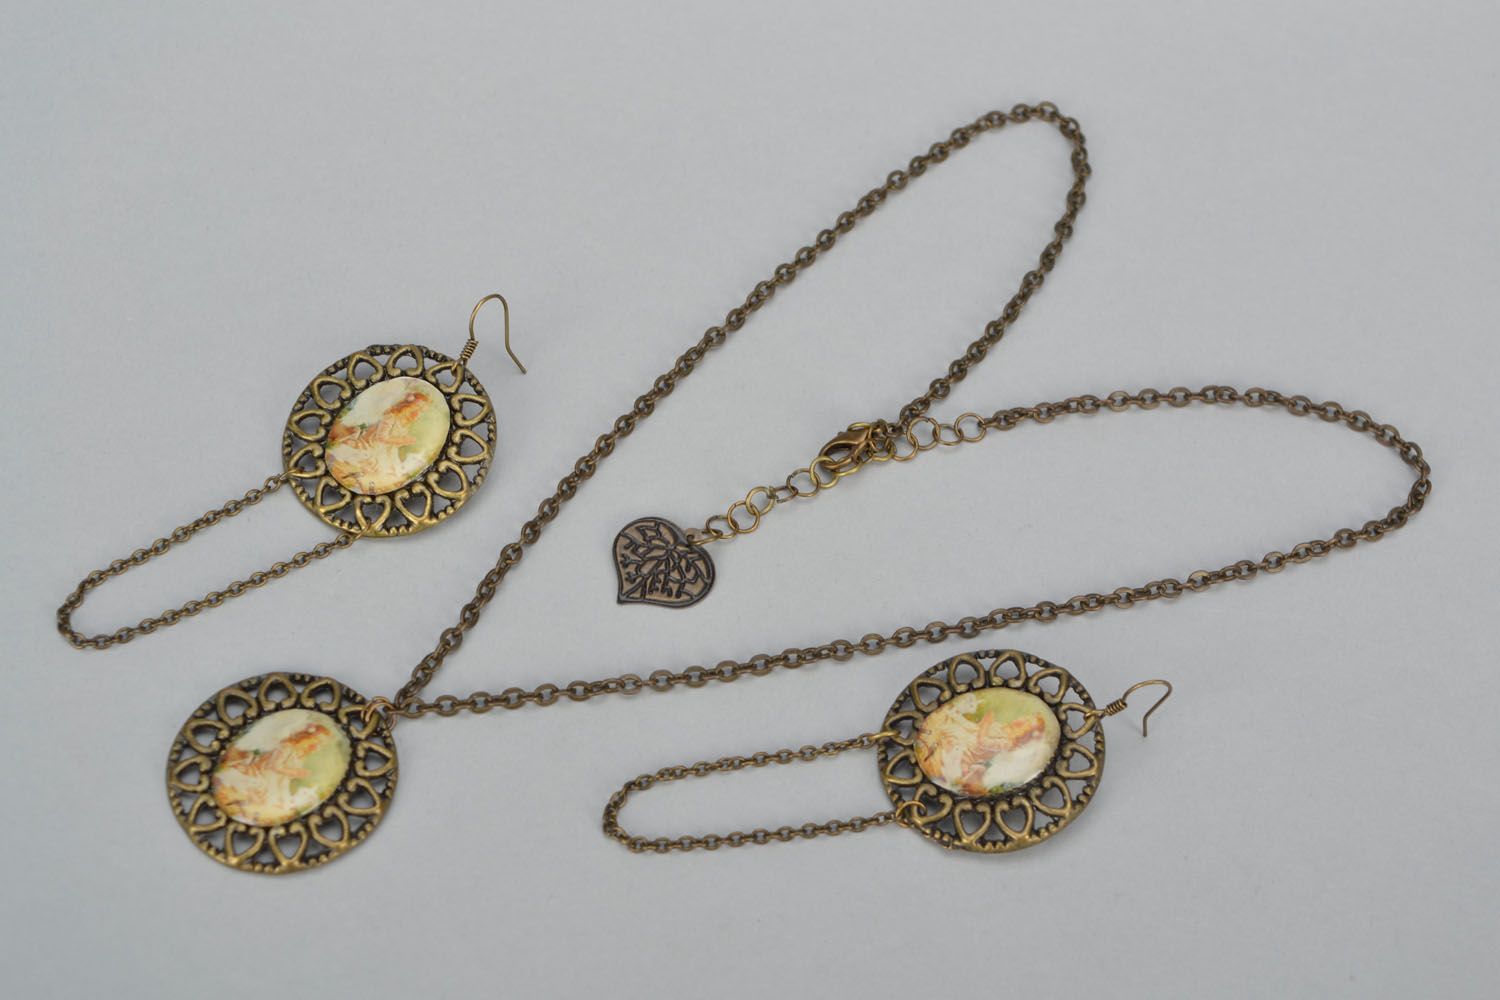 Homemade earrings and pendant photo 2